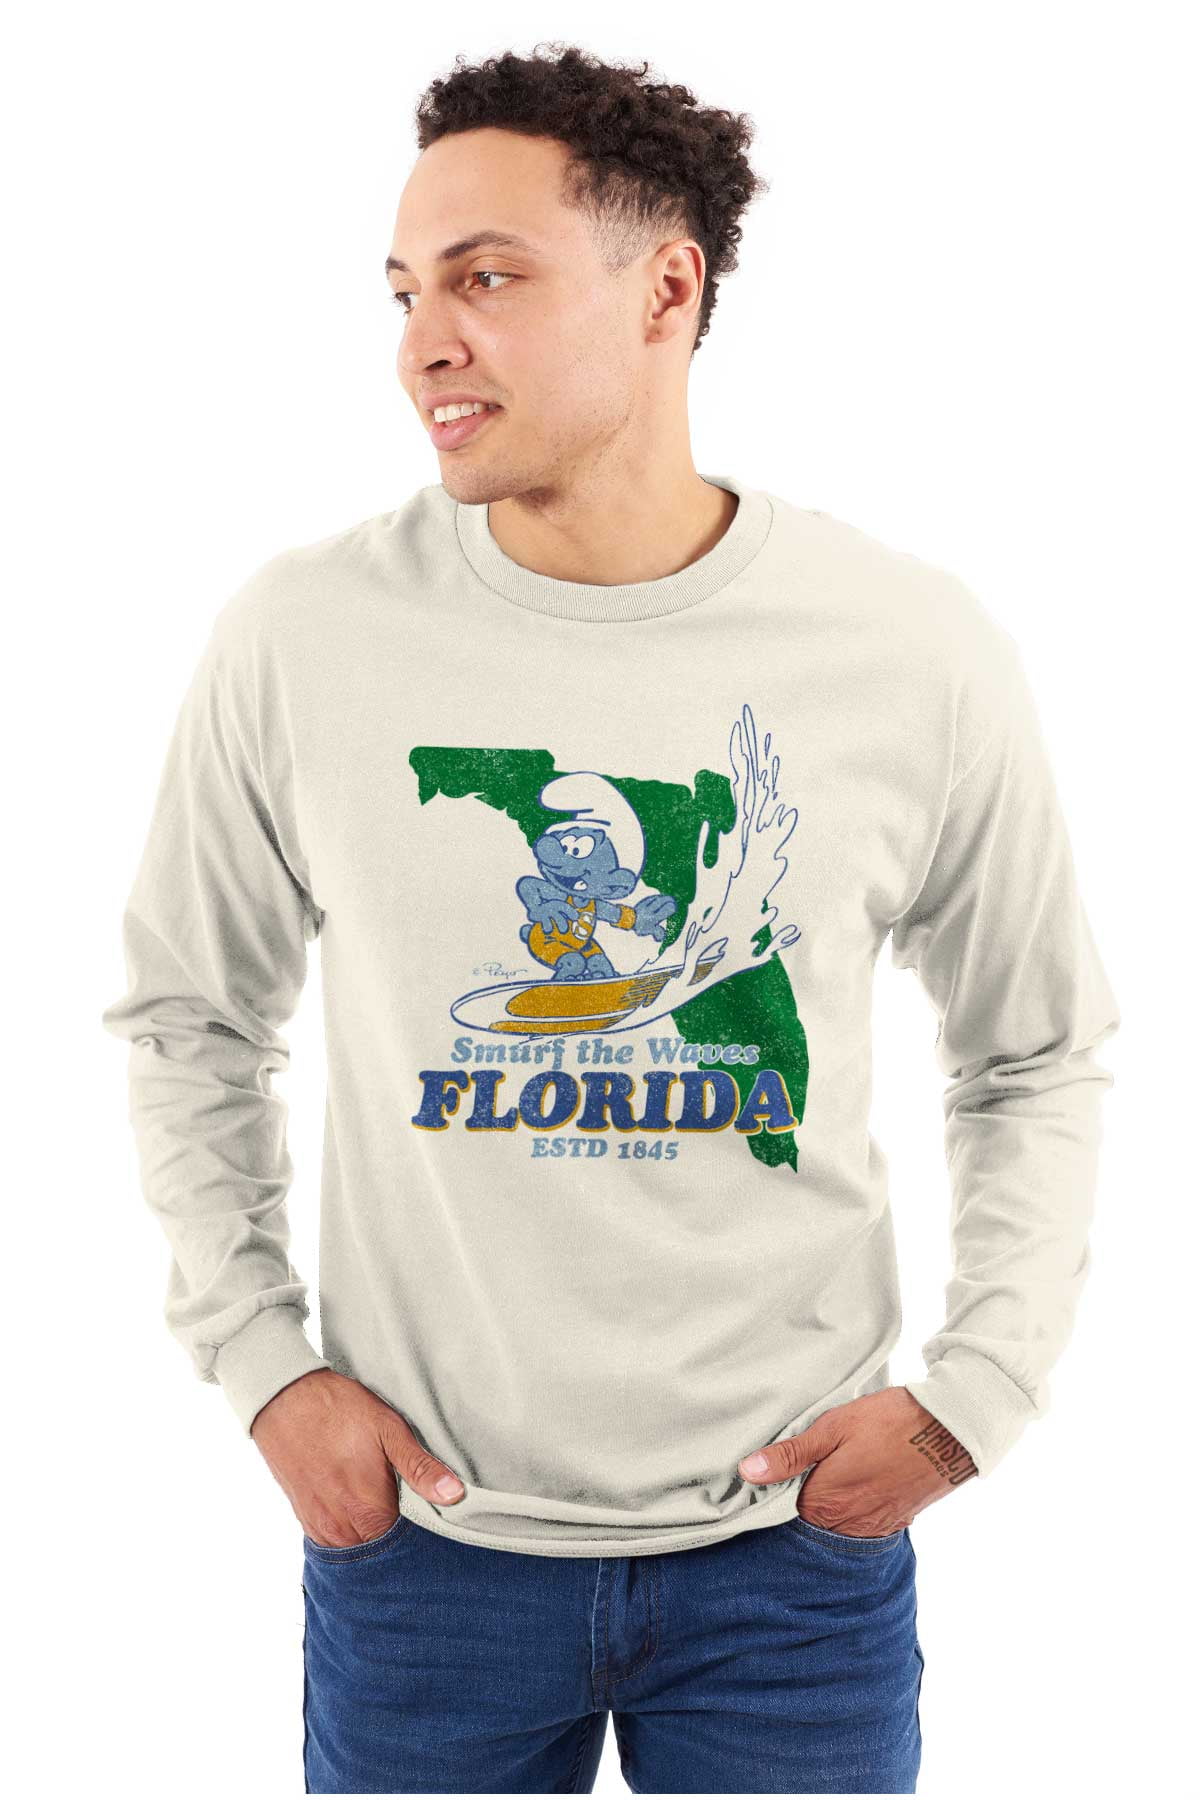 Florida FL Surf Beach Sunshine Smurf Long Sleeve TShirt Men Women